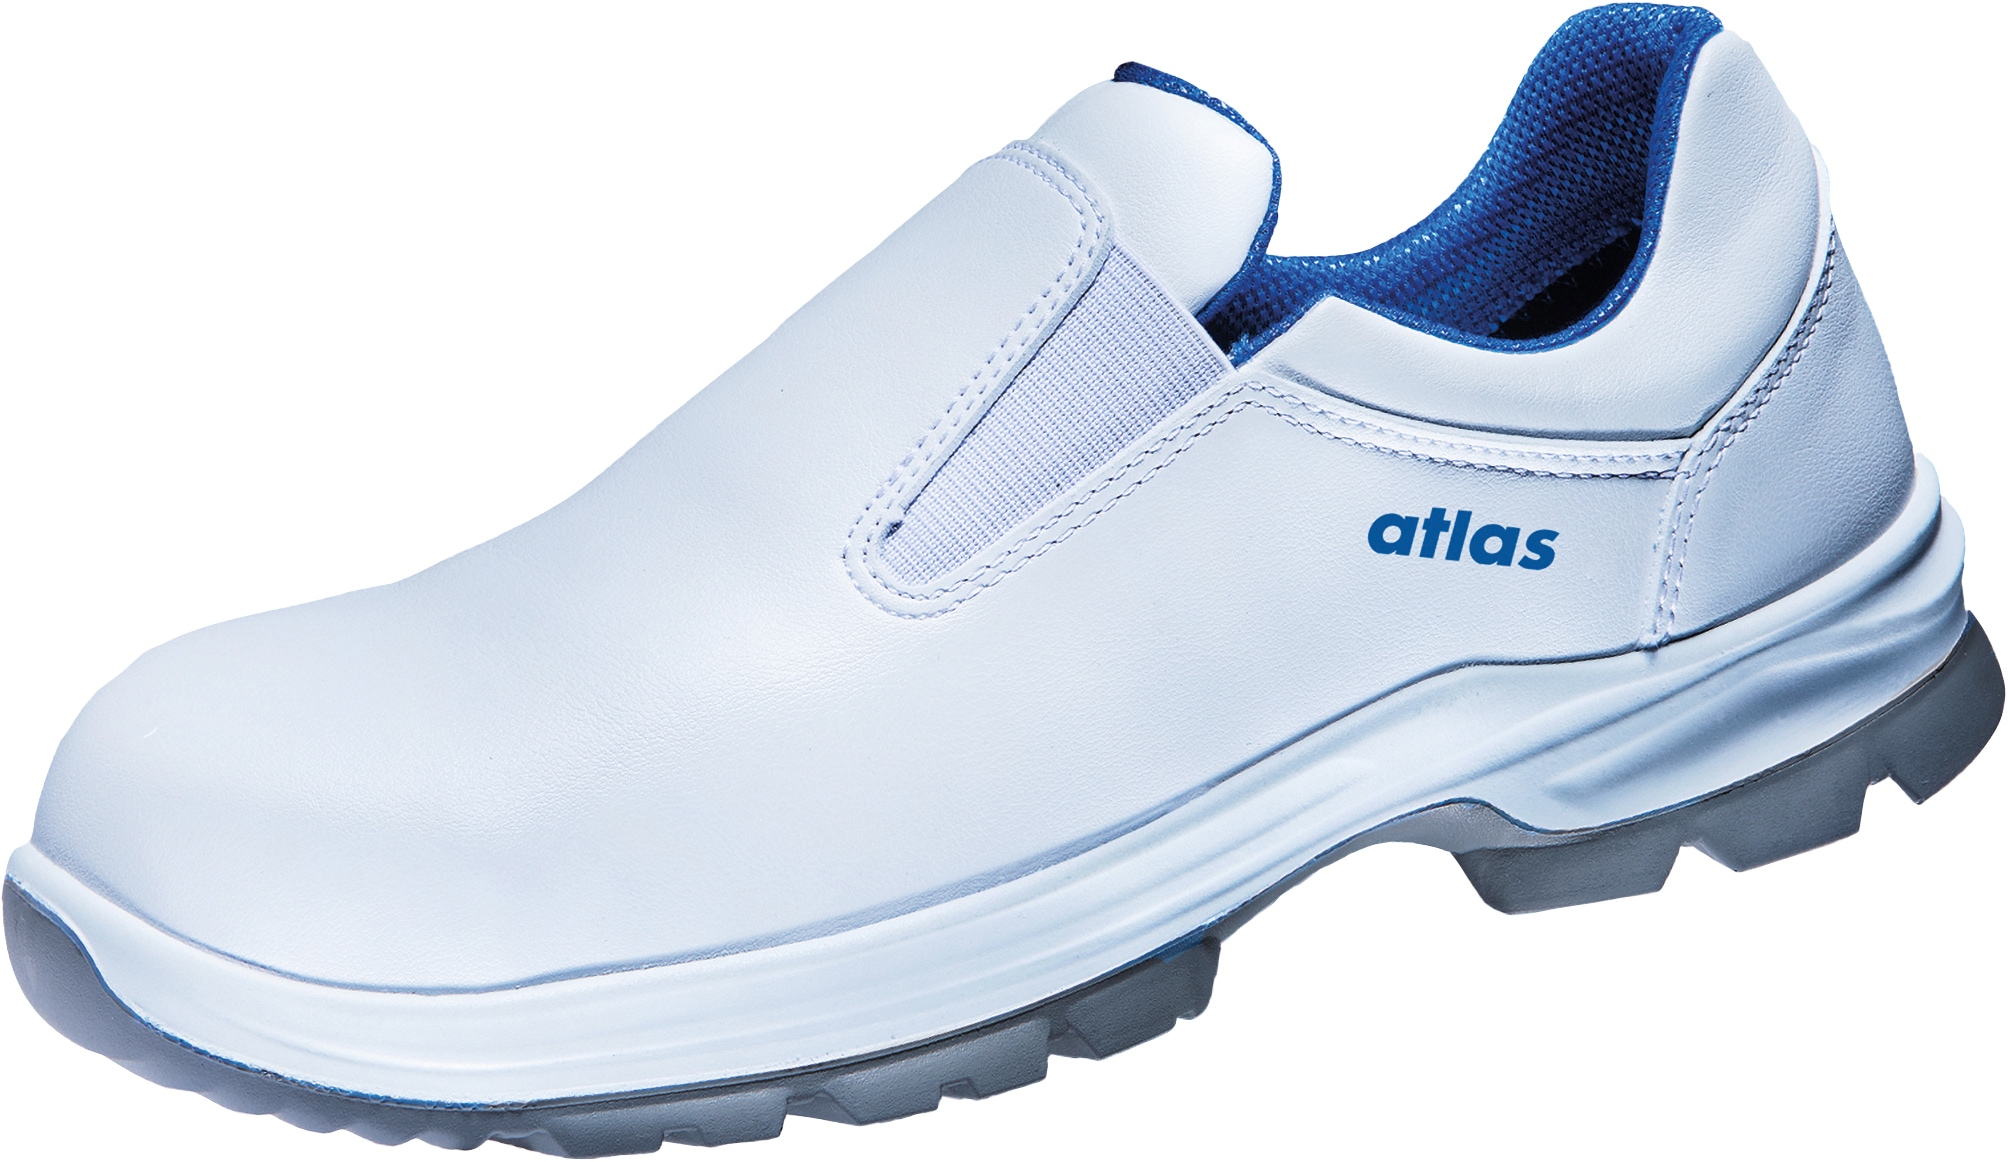 Atlas Schuhe Arbeitsschuh 490 2.0 ESD«, S2 jetzt CL bestellen »Sneaker